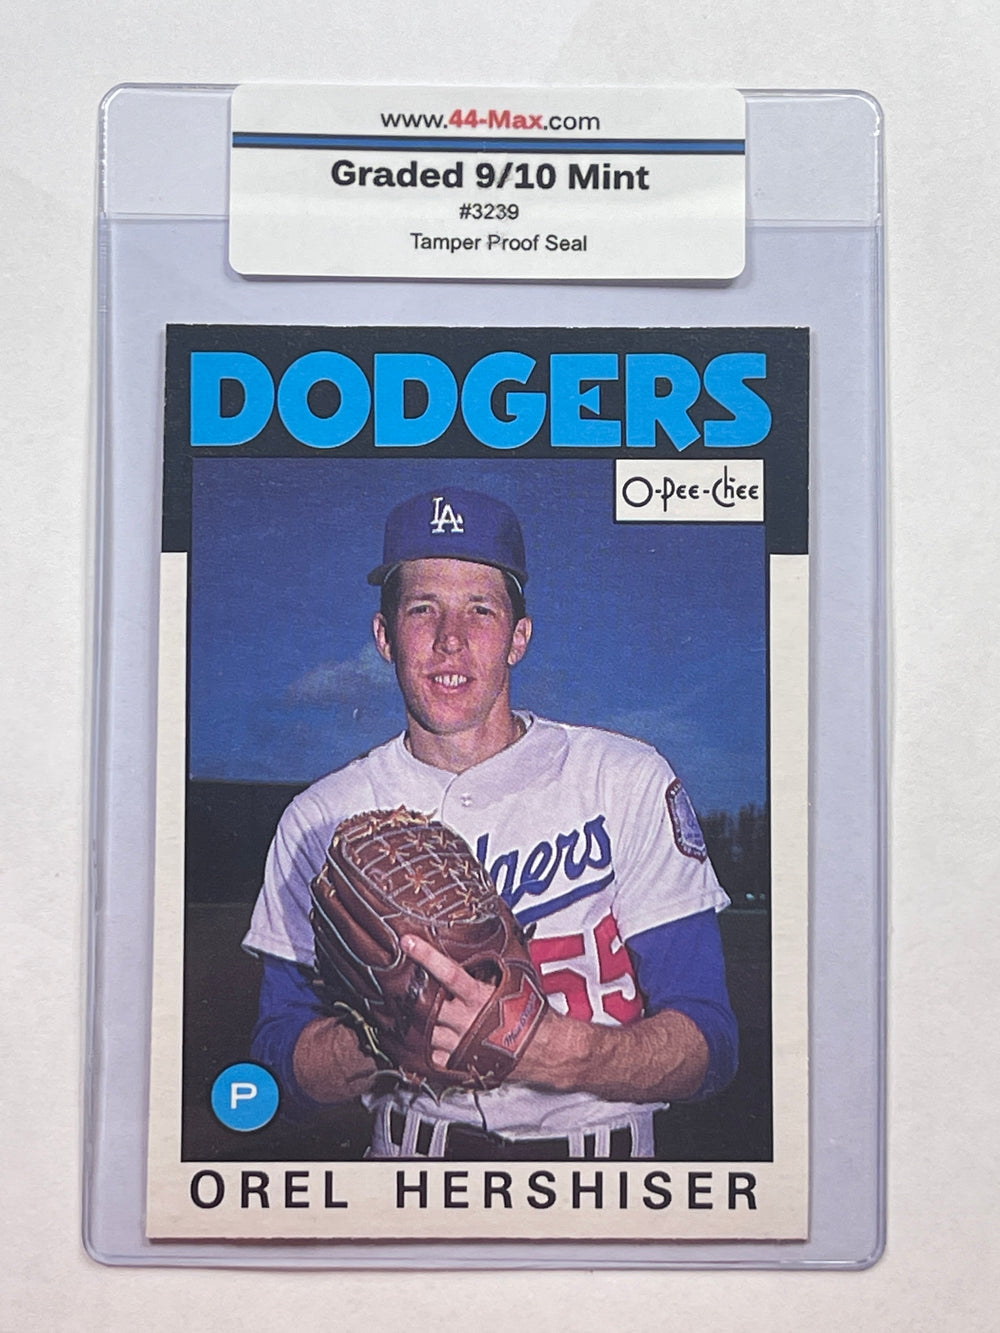 Orel Hershiser 1986 O-Pee-Chee Baseball Card. 44-Max 9/10 MINT #3239